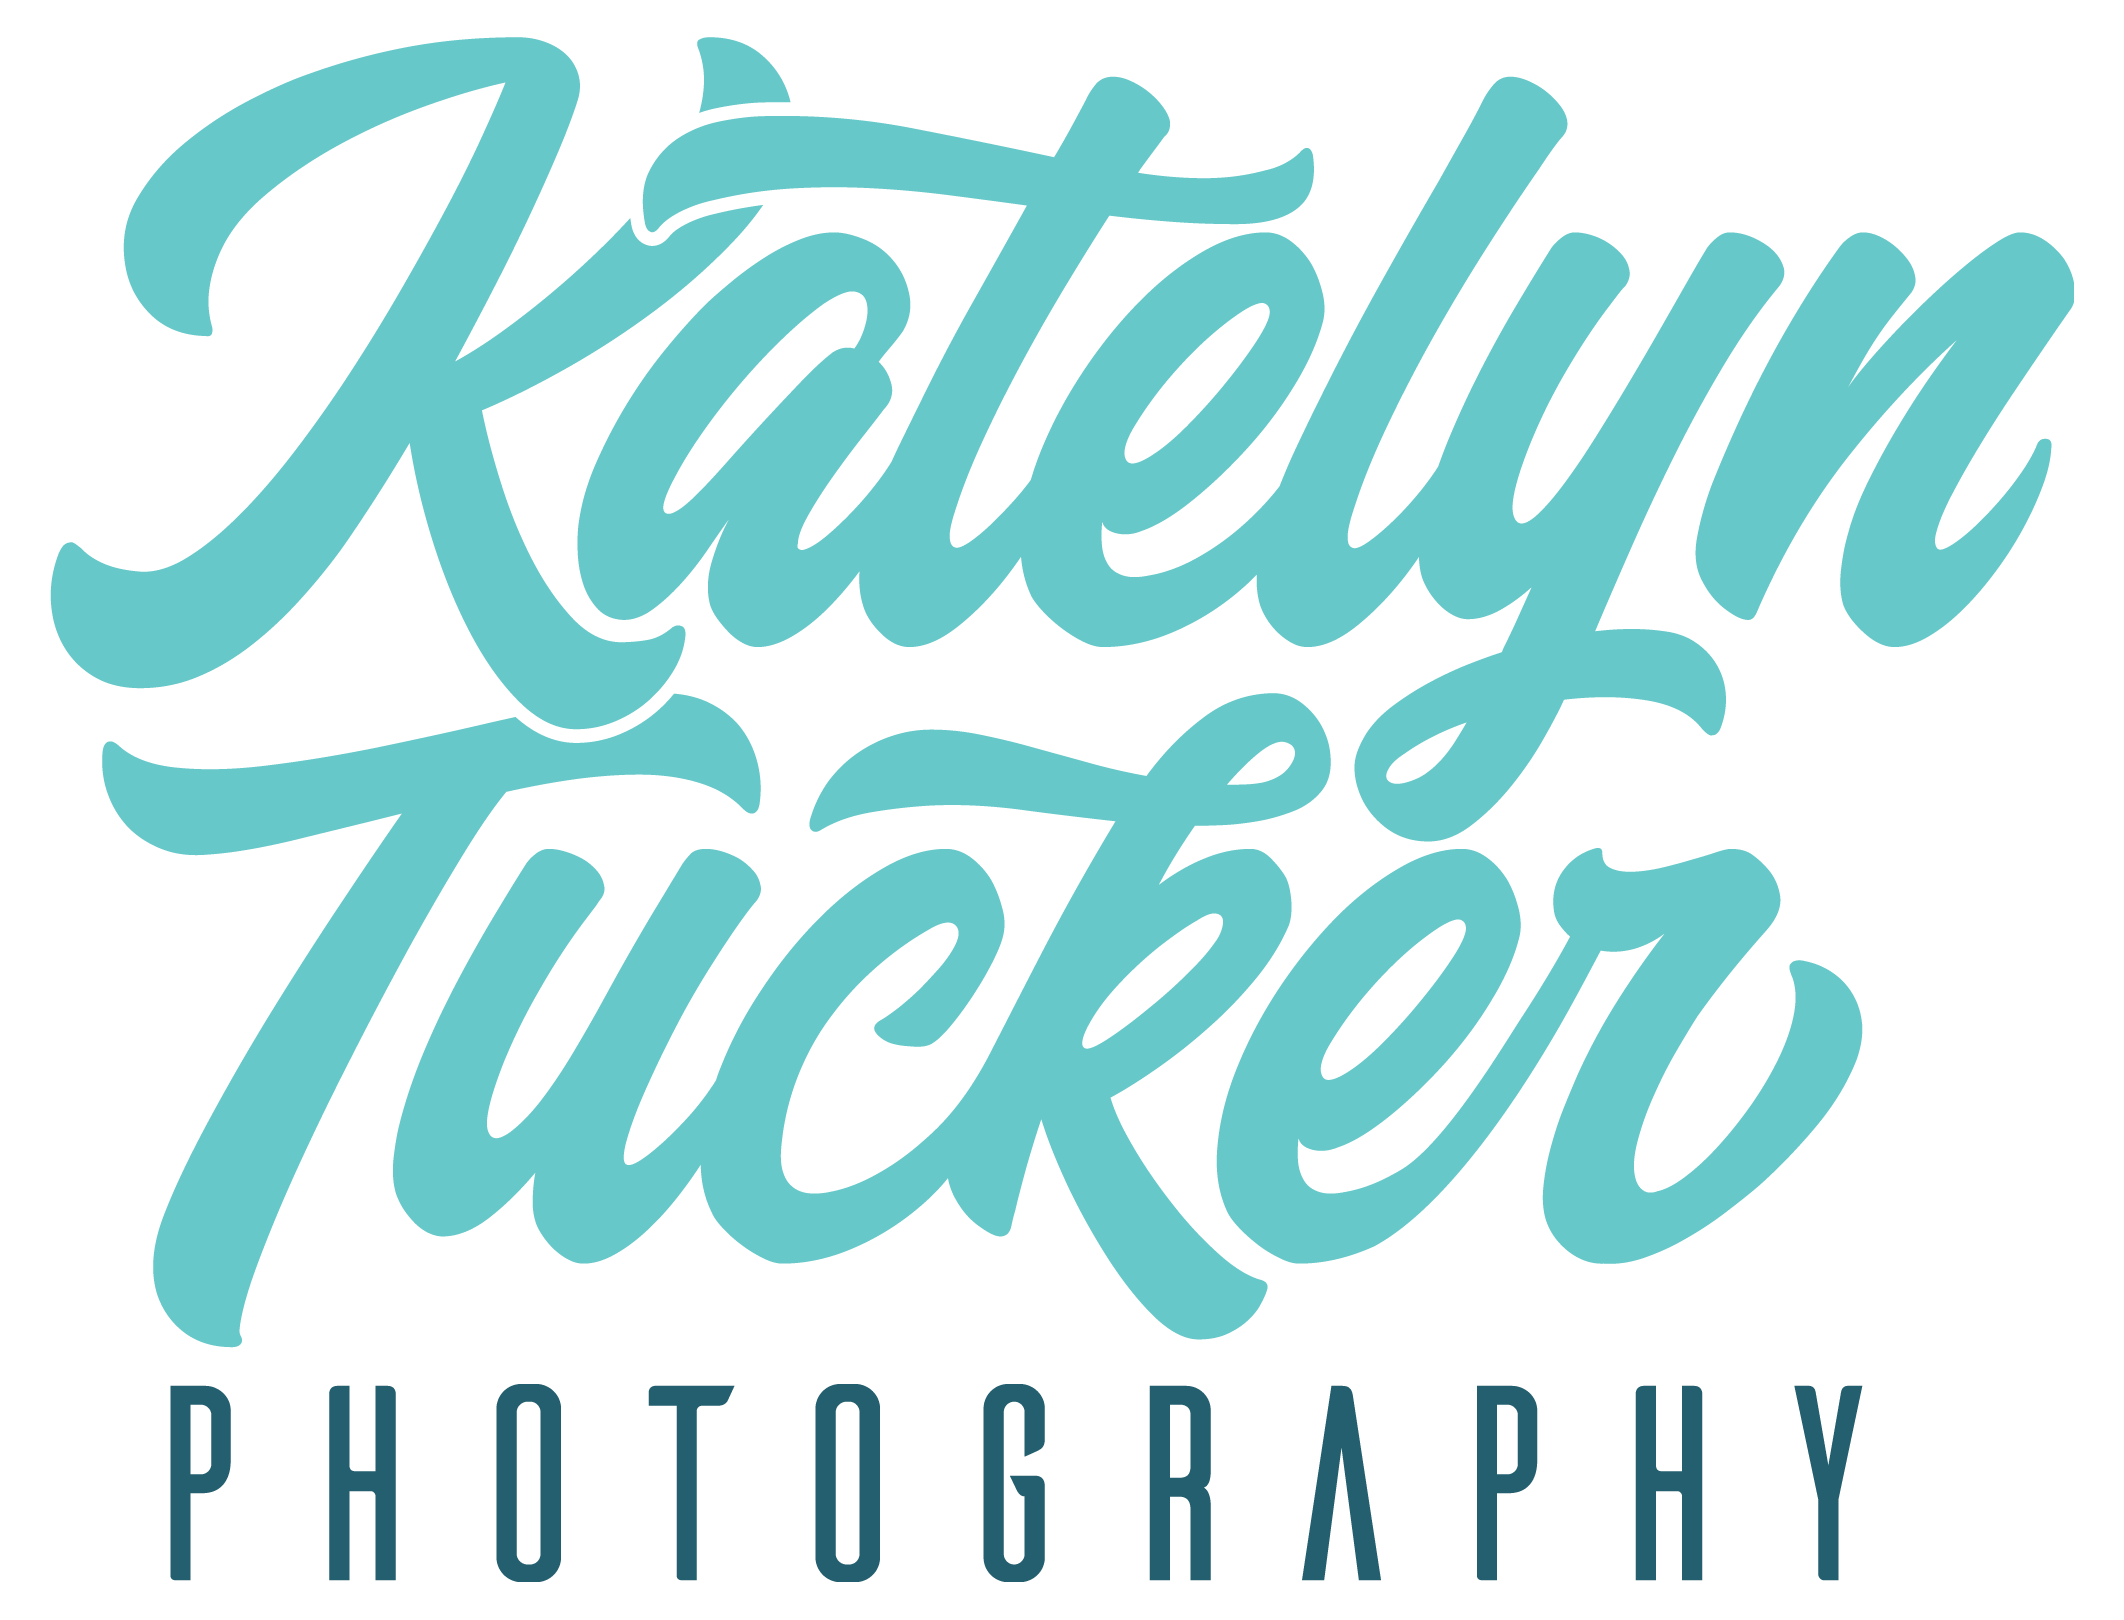 Katelyn Tucker Photography logo